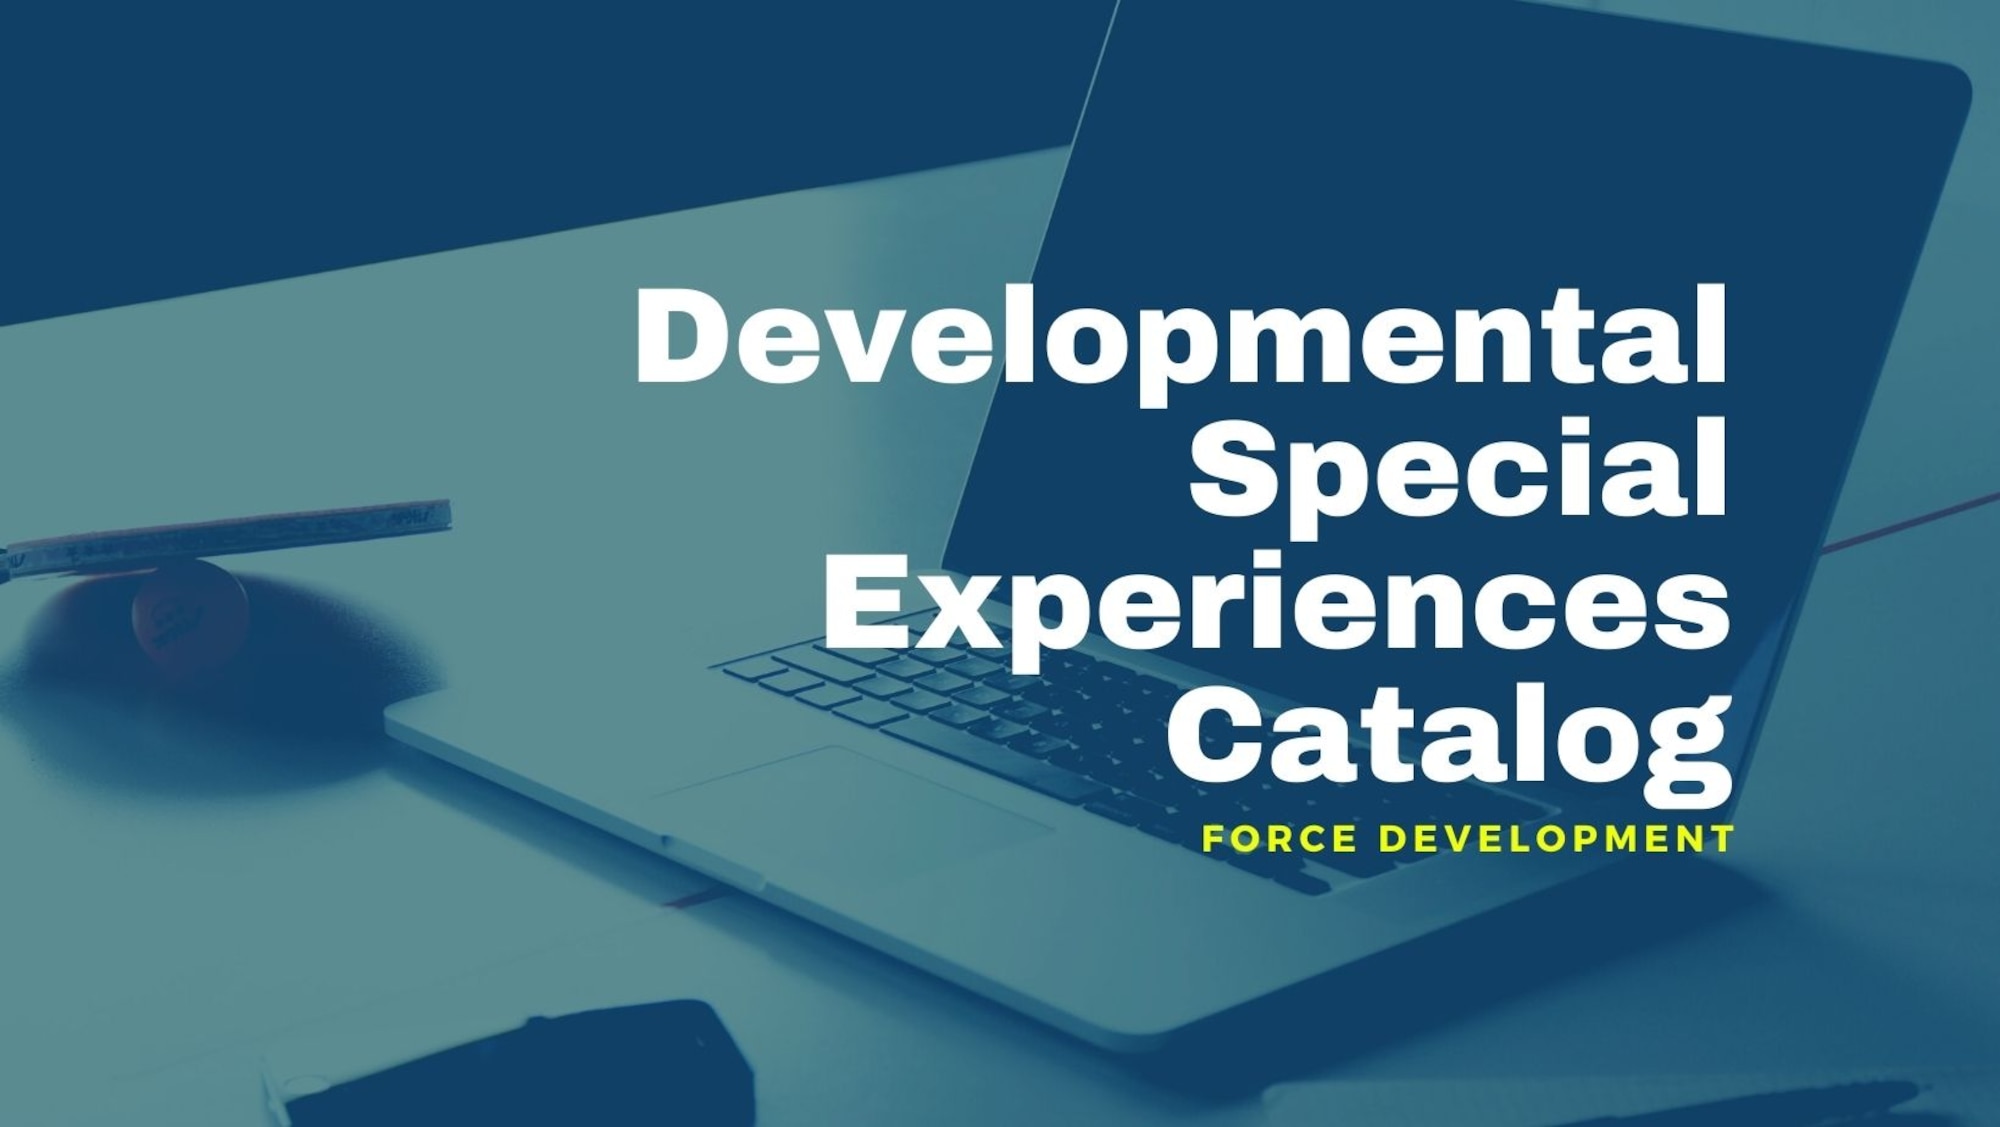 Graphic highlighting Developmental Special Experiences Catalog.